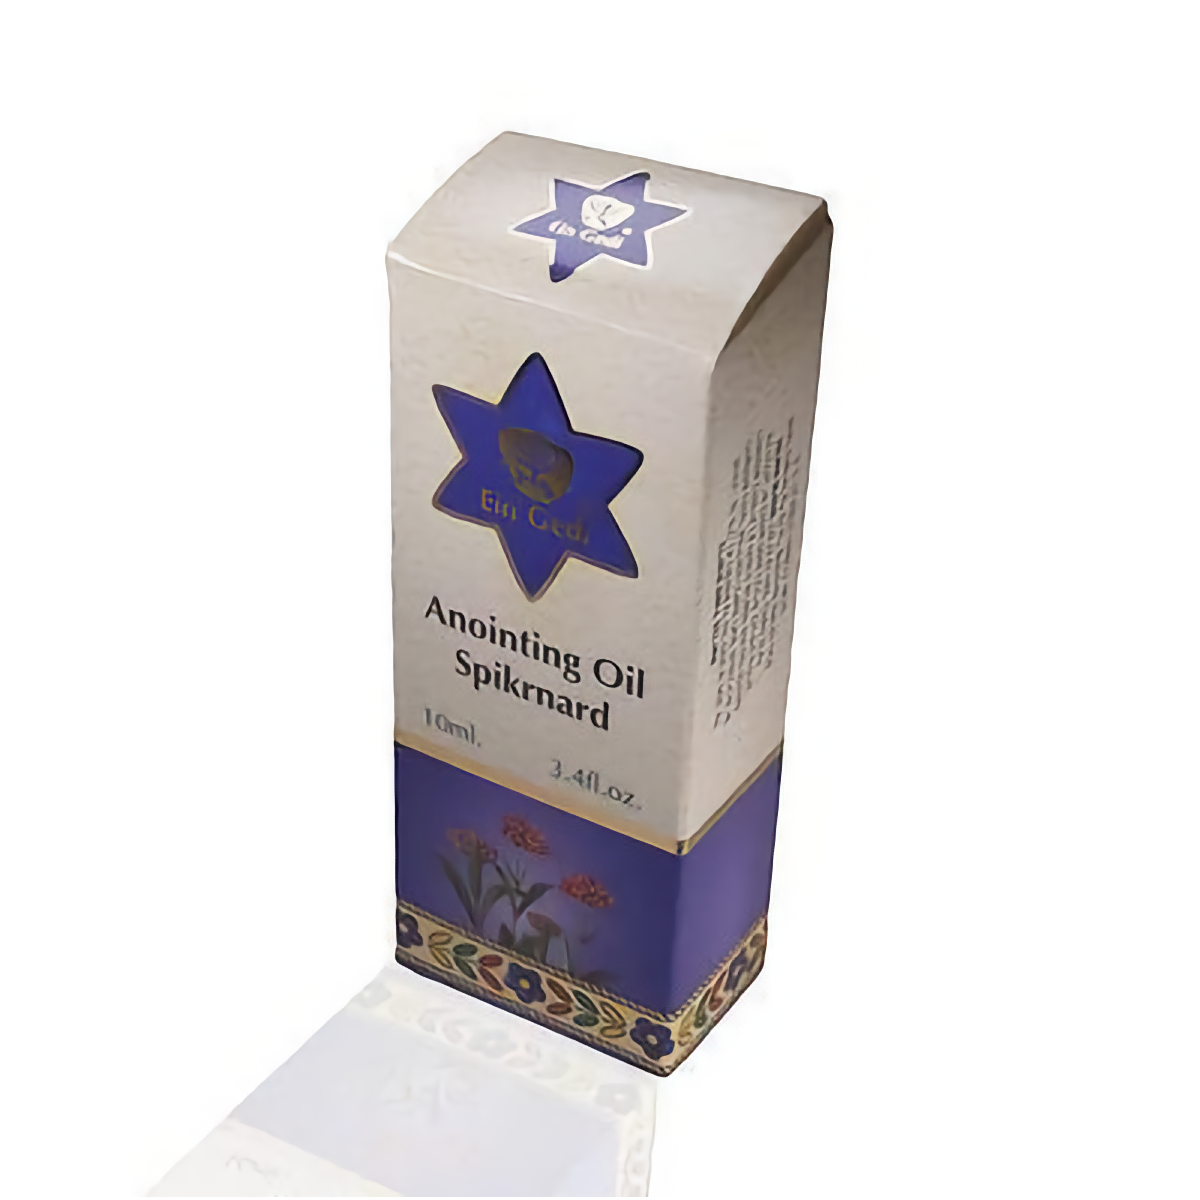 5 x Roll On Anointing Oil Spikenard 0.34 oz - 10 ml. From Holyland Jerusalem